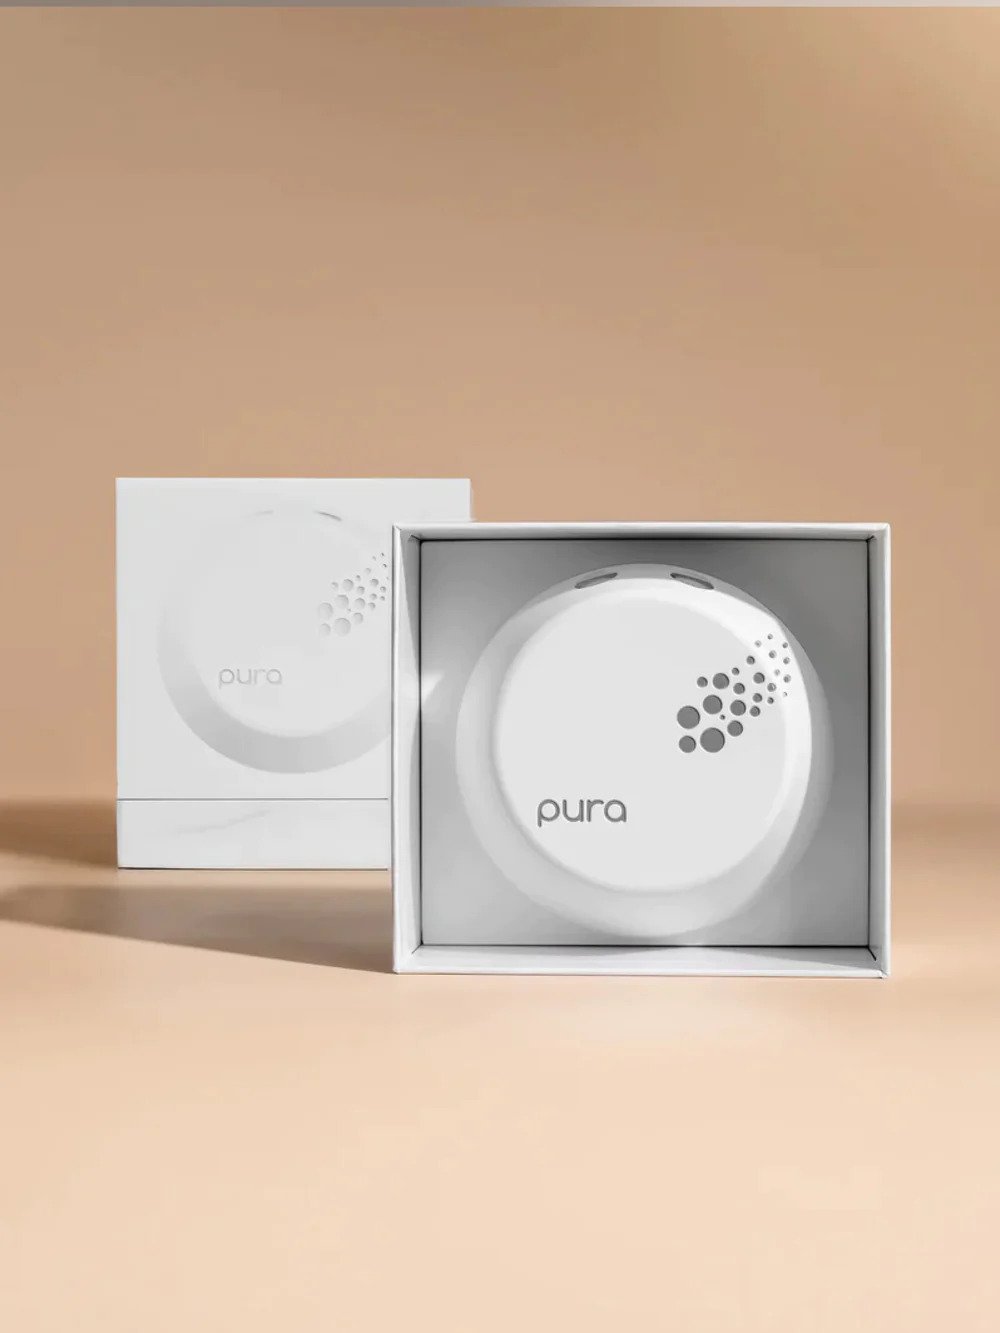 Pura Smart Home Fragrance Device